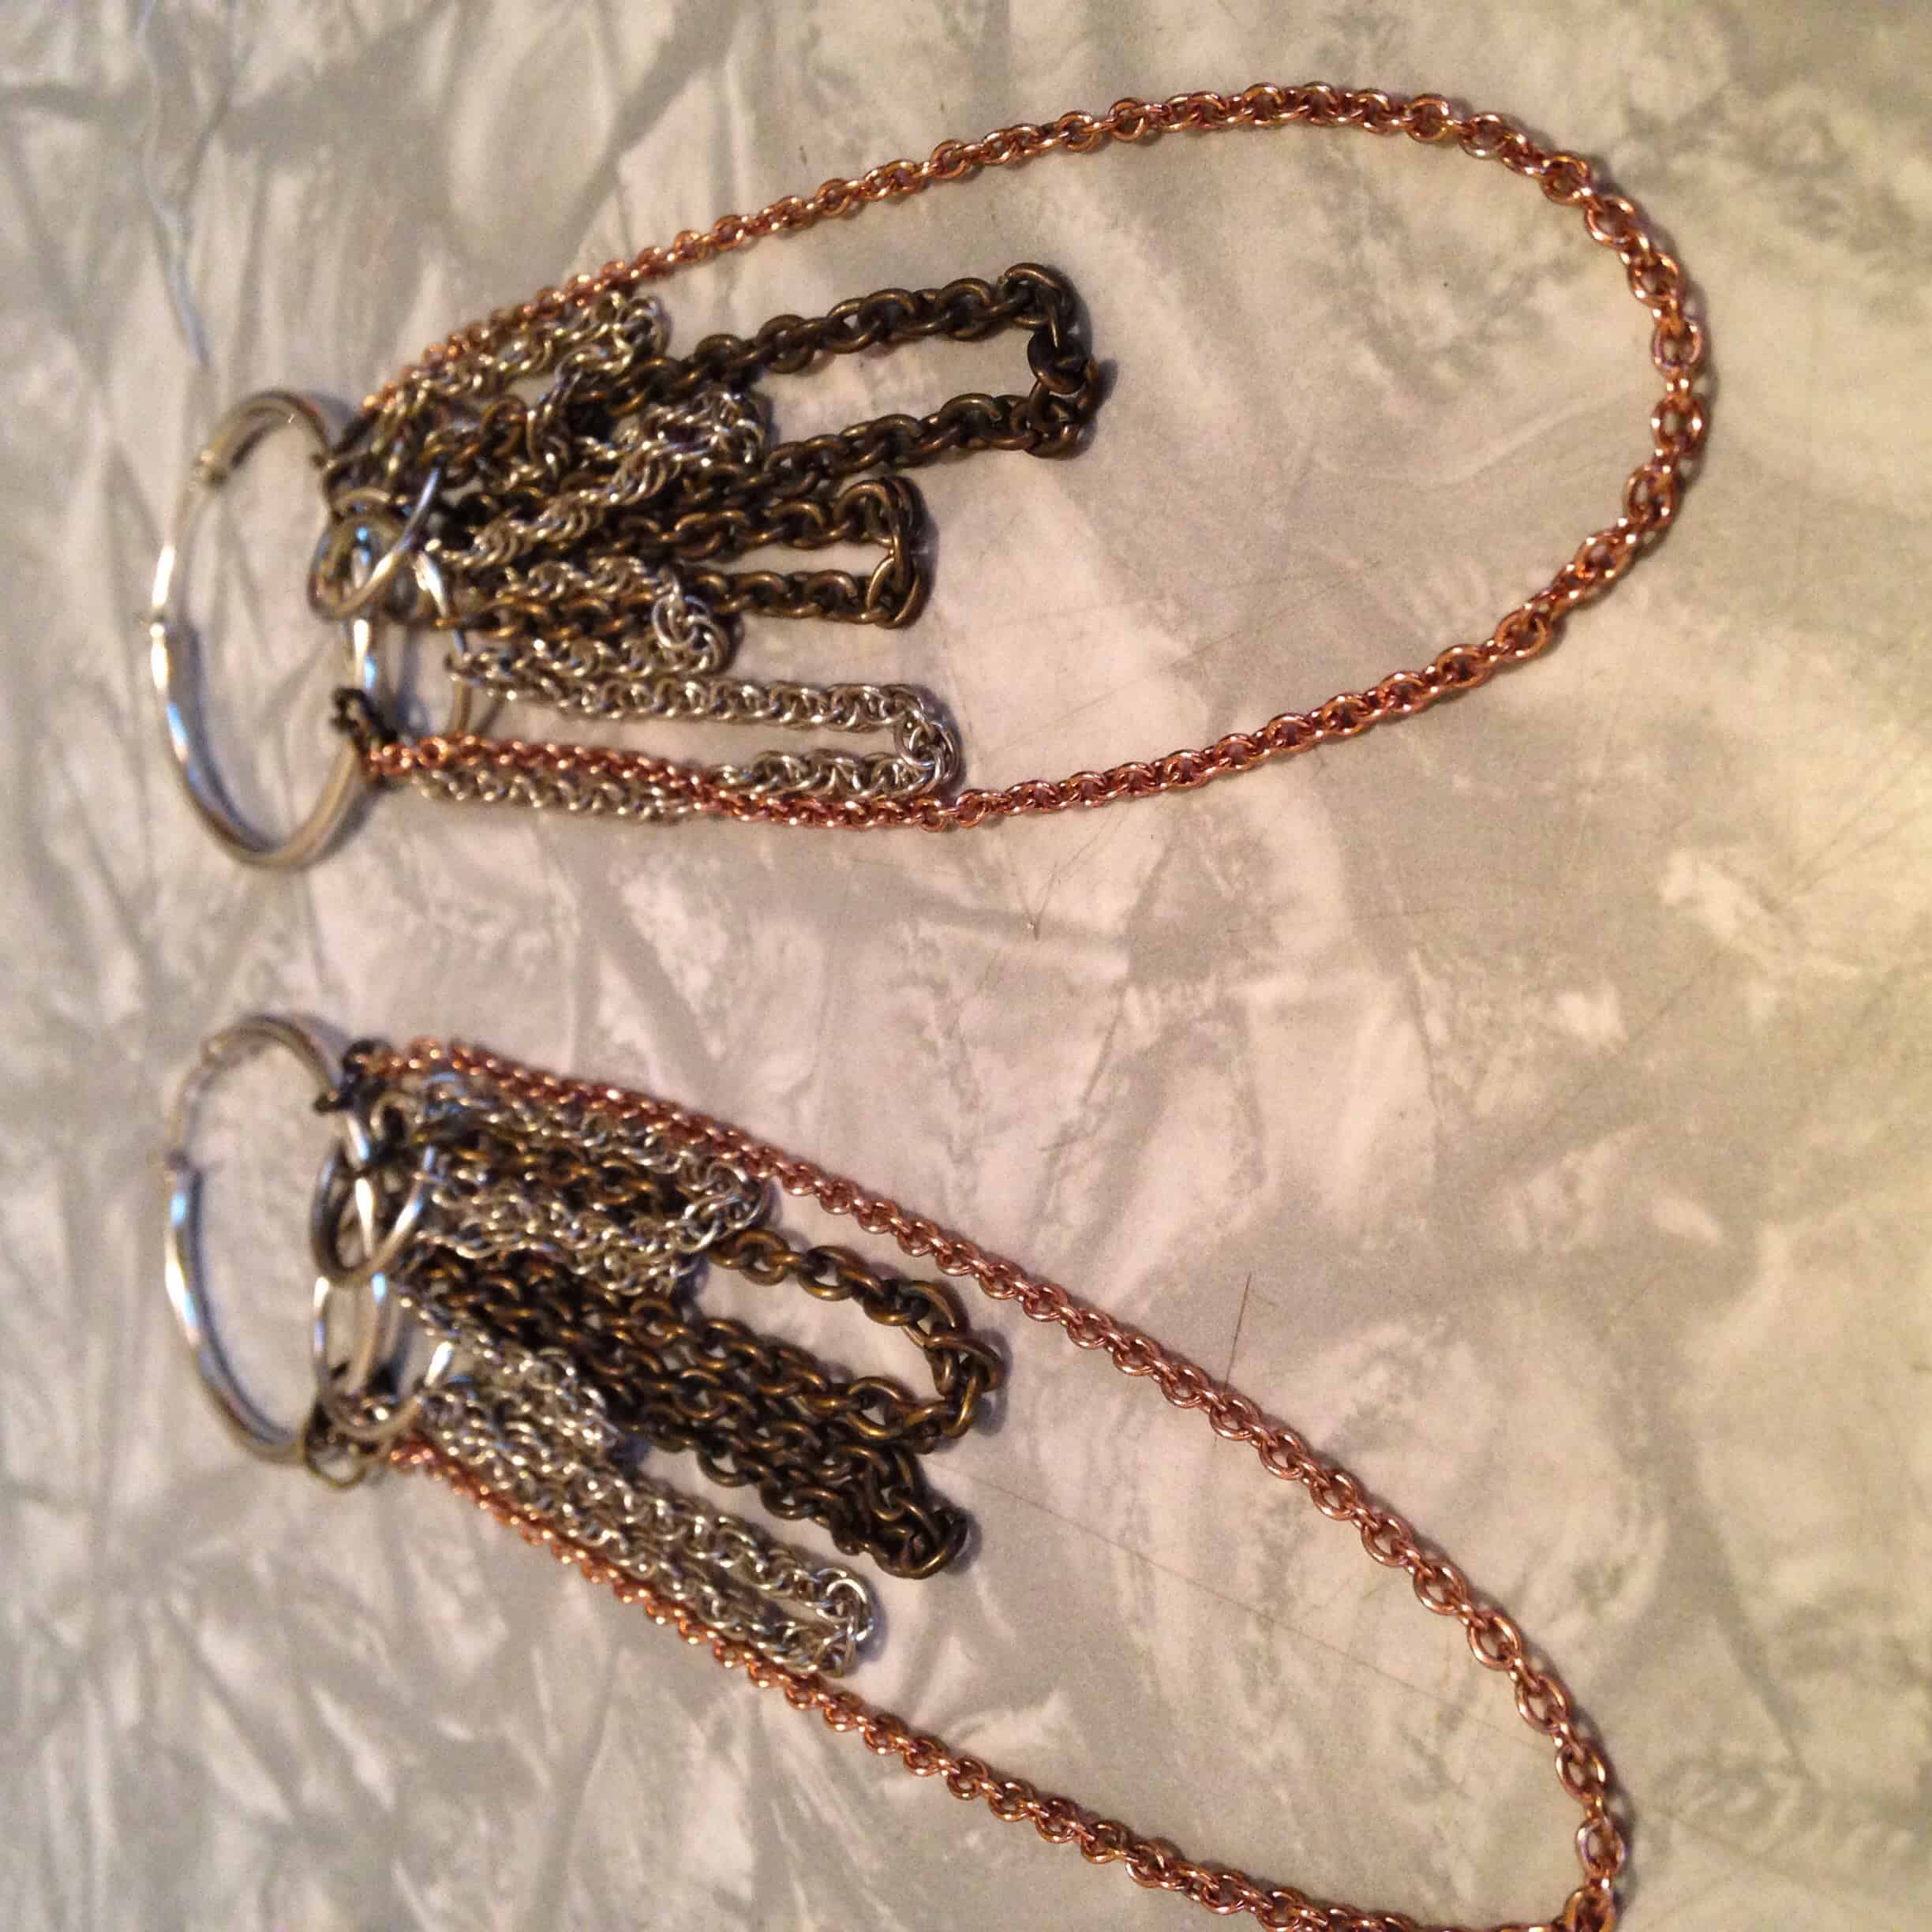 Broken necklace chains to hoop earrings